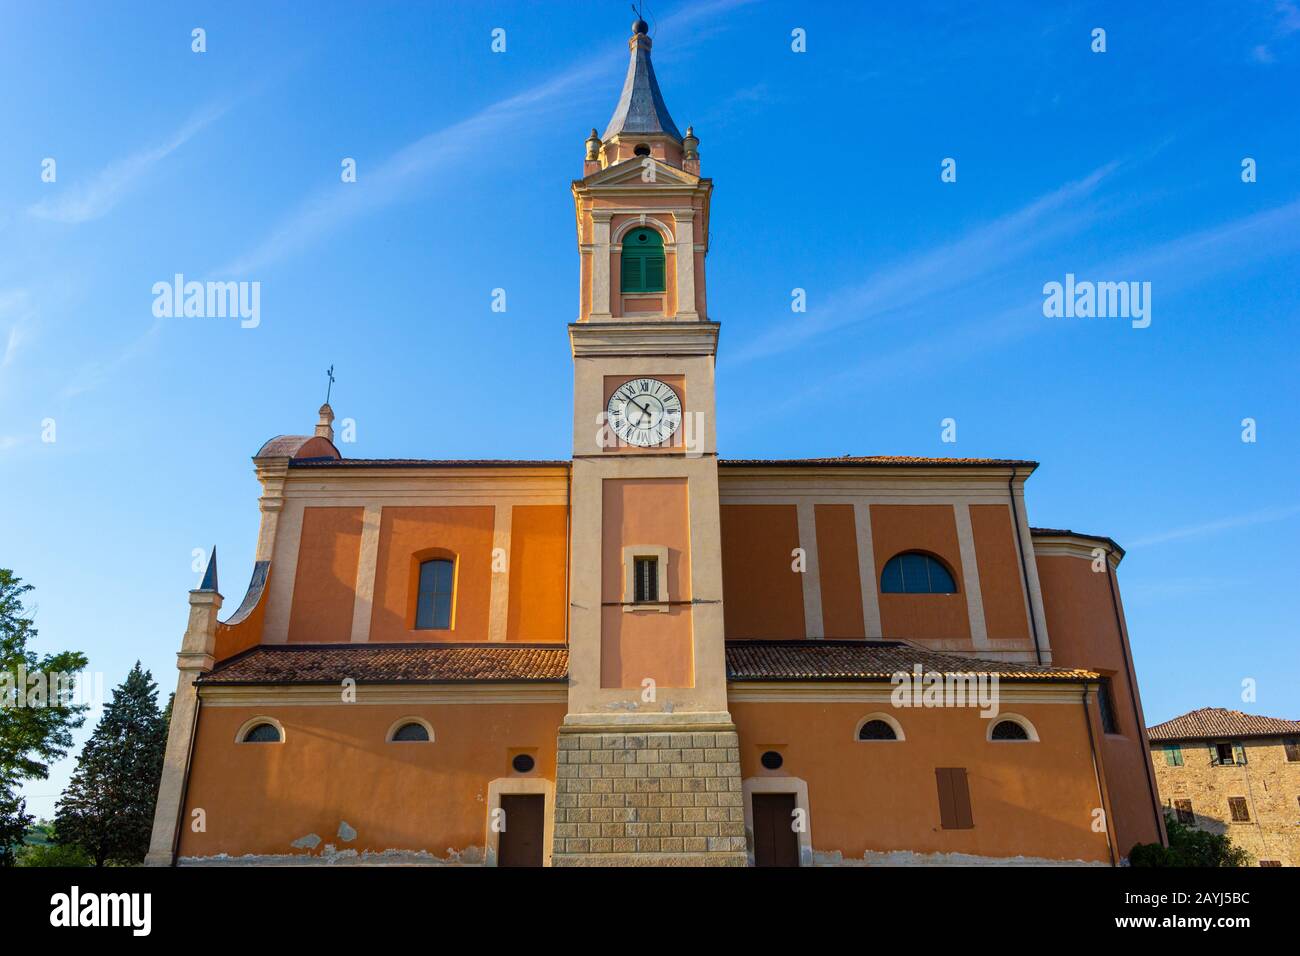 Die Kirche St. Apollinar im Castello di Serravalle, Valsamoggia, Emilia Romagna, Italien, an einem sonnigen Tag Stockfoto